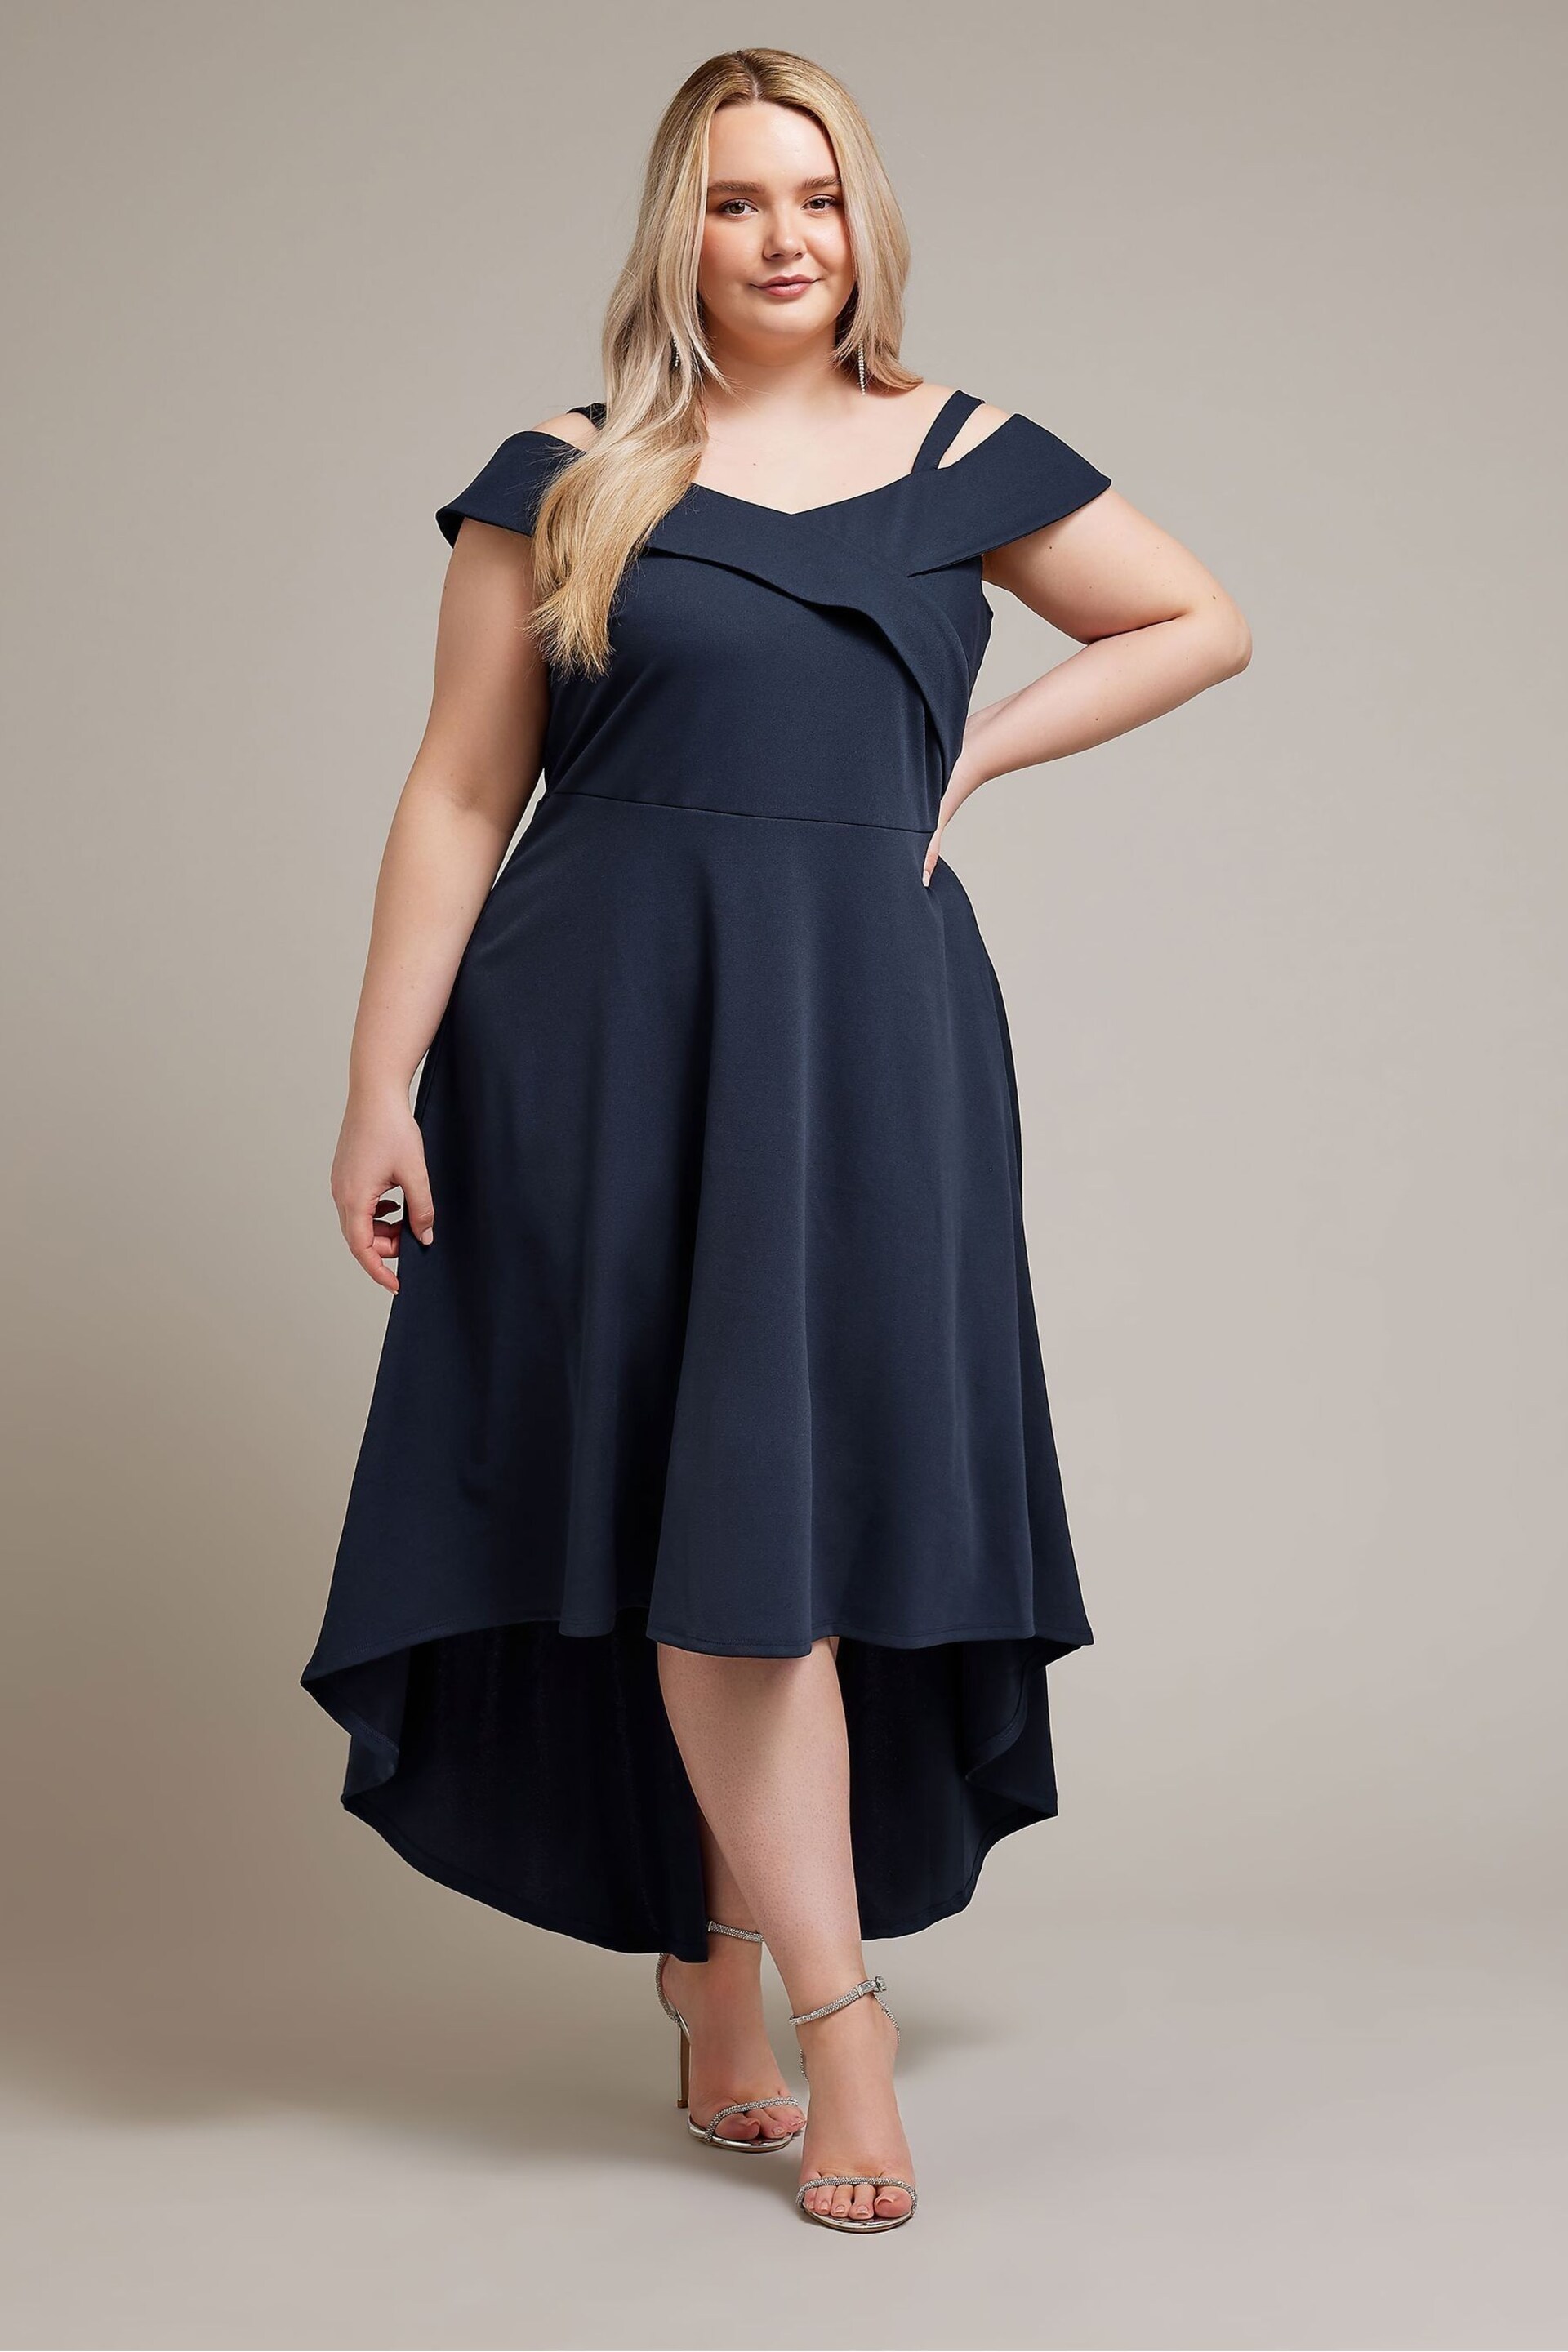 YOURS LONDON Curve Navy Blue Black Bardot Dipped Hem Dress - Image 4 of 5